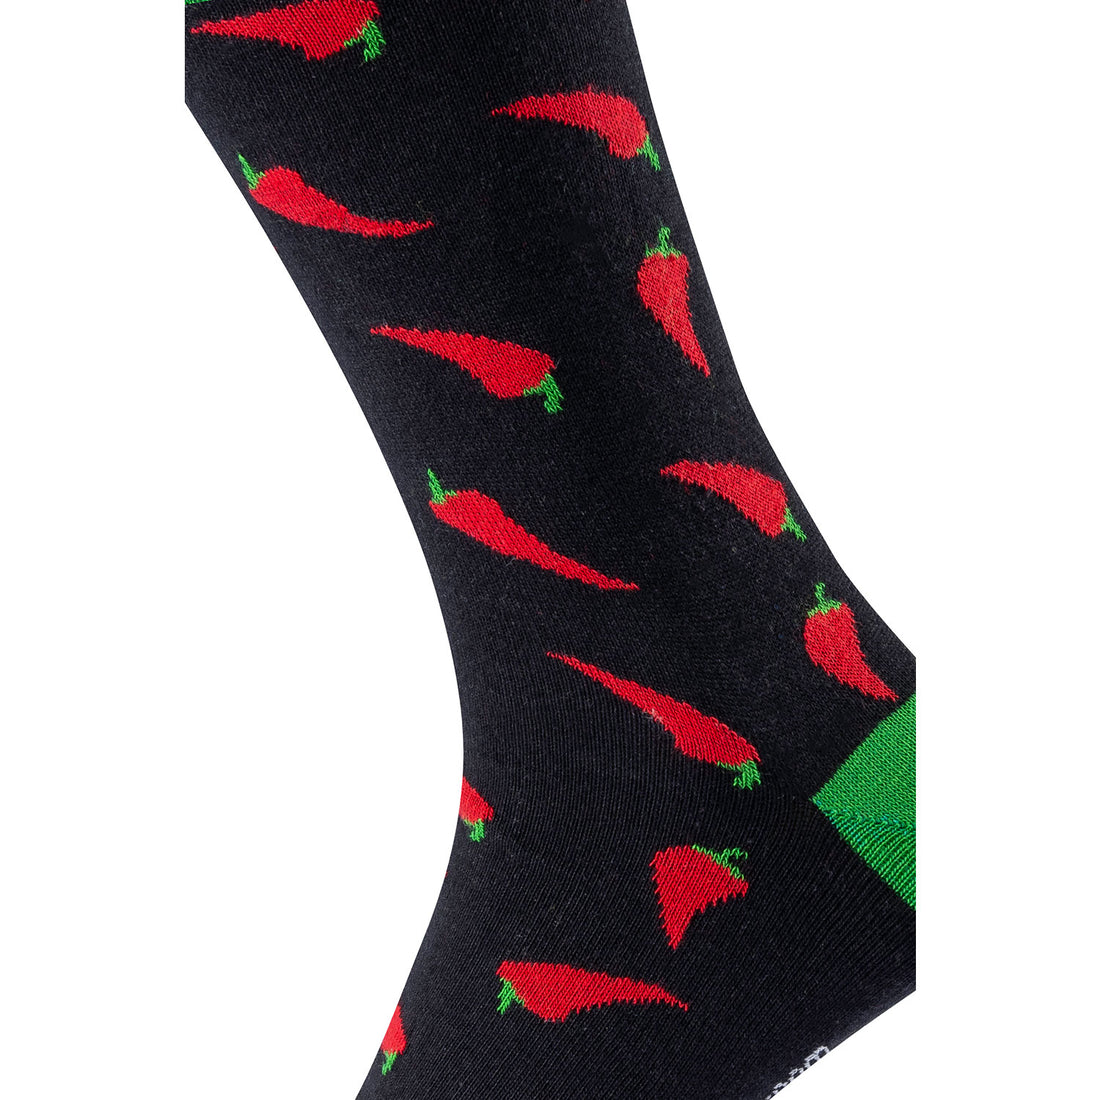 ChiliLifestyle Lustige Socken, Chili, 1 Paar